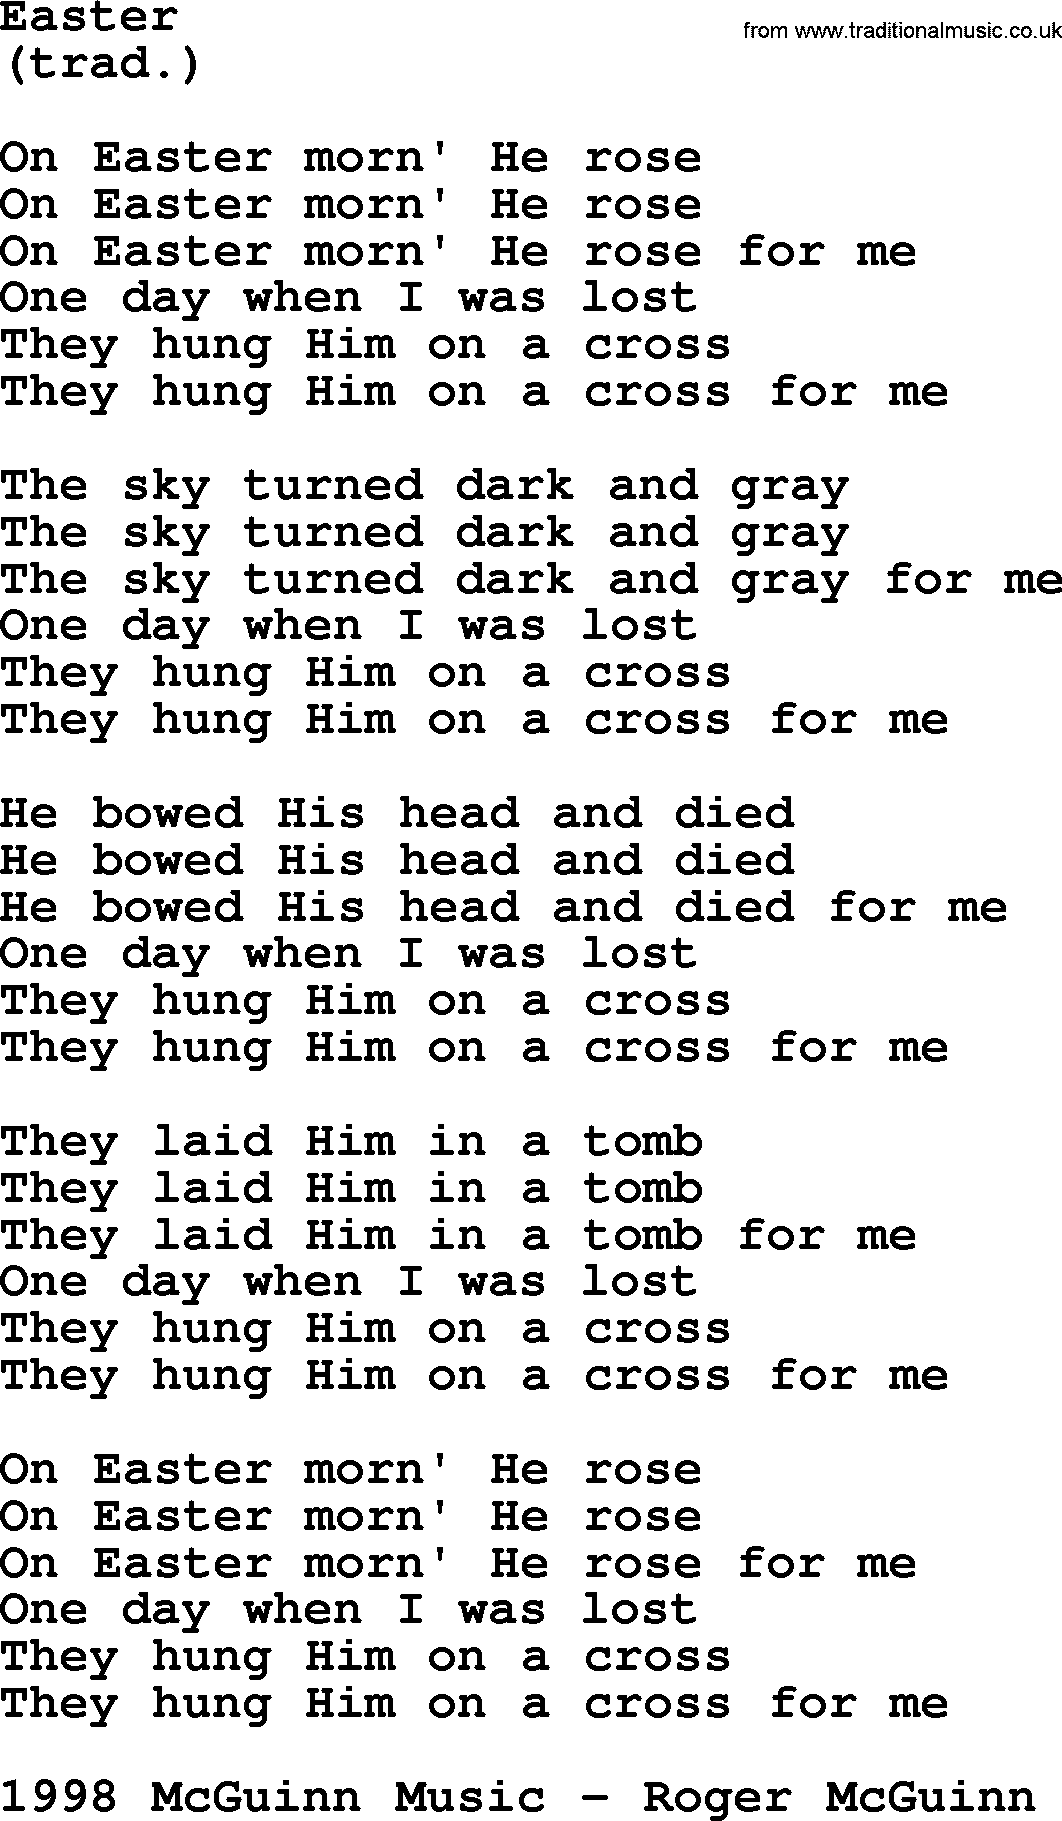 The Byrds song Easter, lyrics